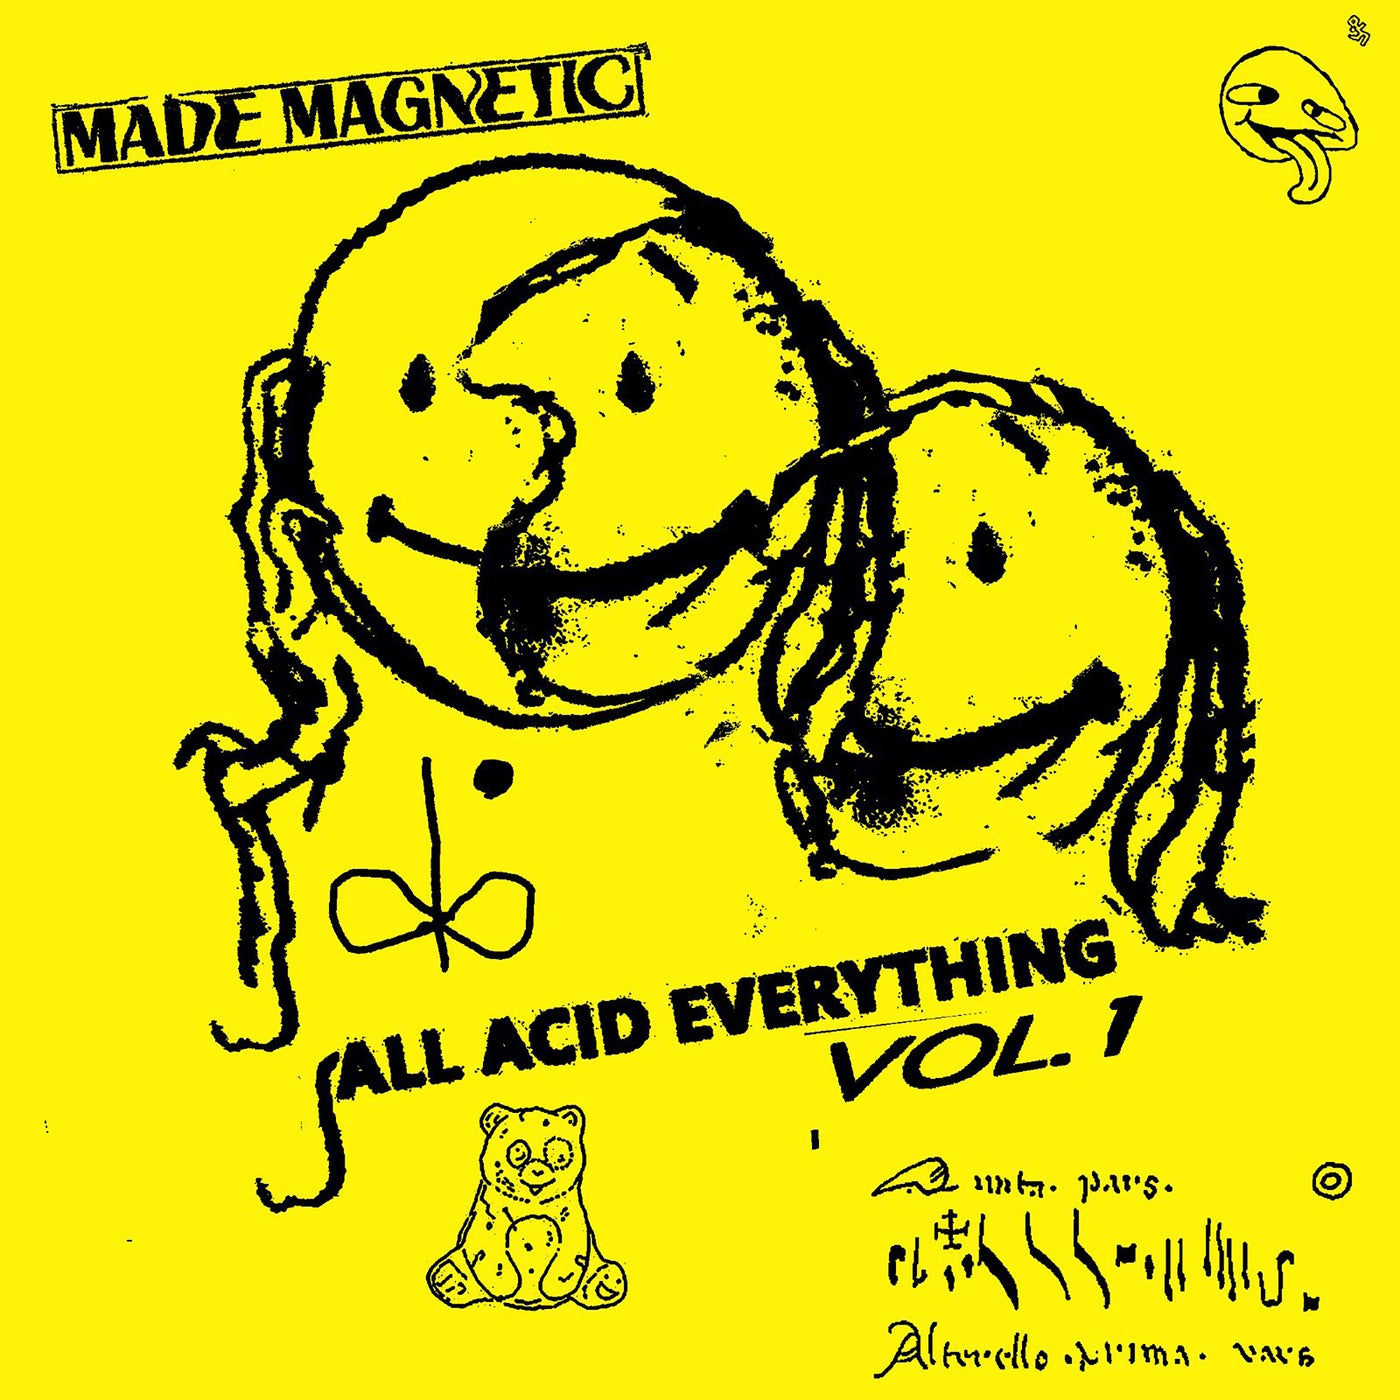 All Acid Everything, Vol. 1